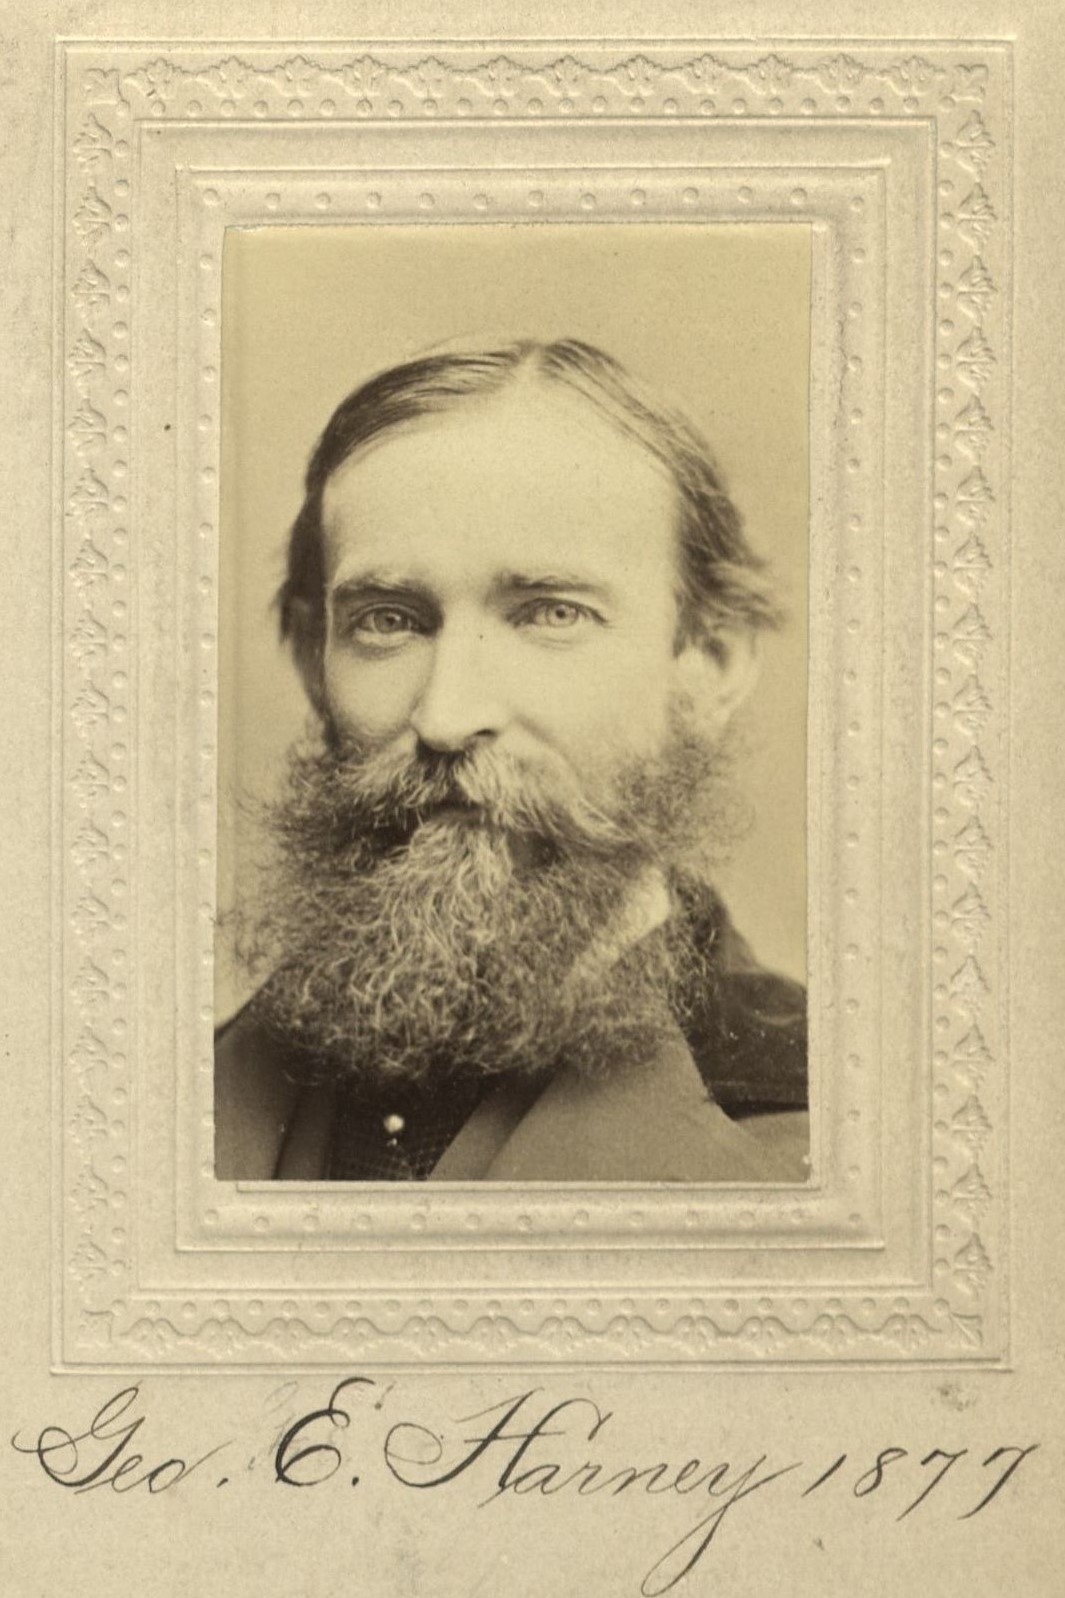 Member portrait of George E. Harney